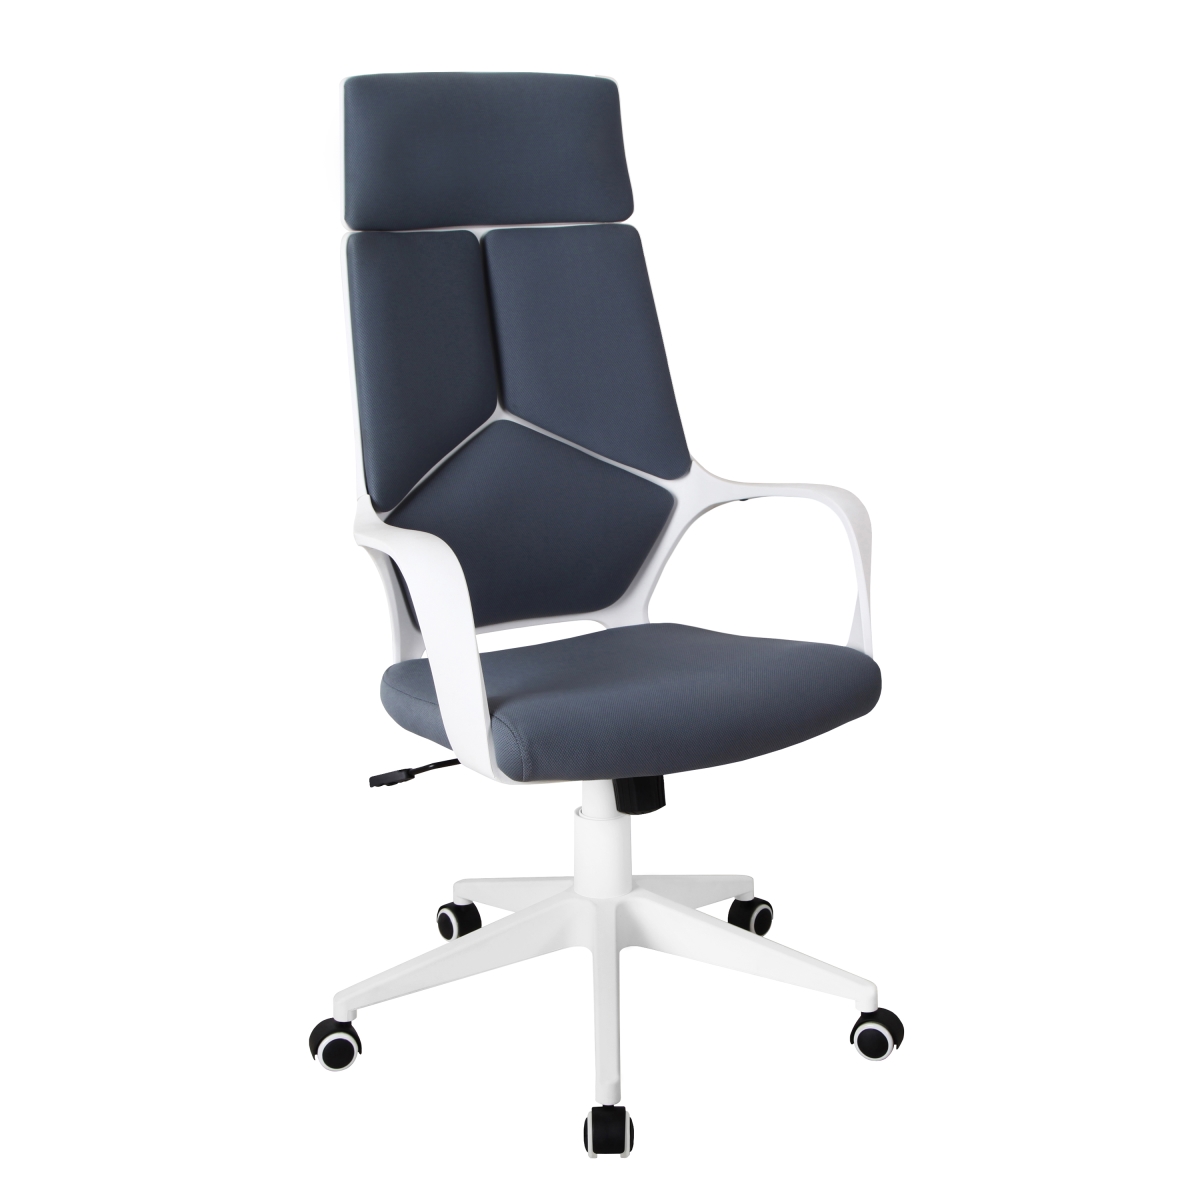 Rta-2023-gry Modern Studio Office Chair, Grey & White